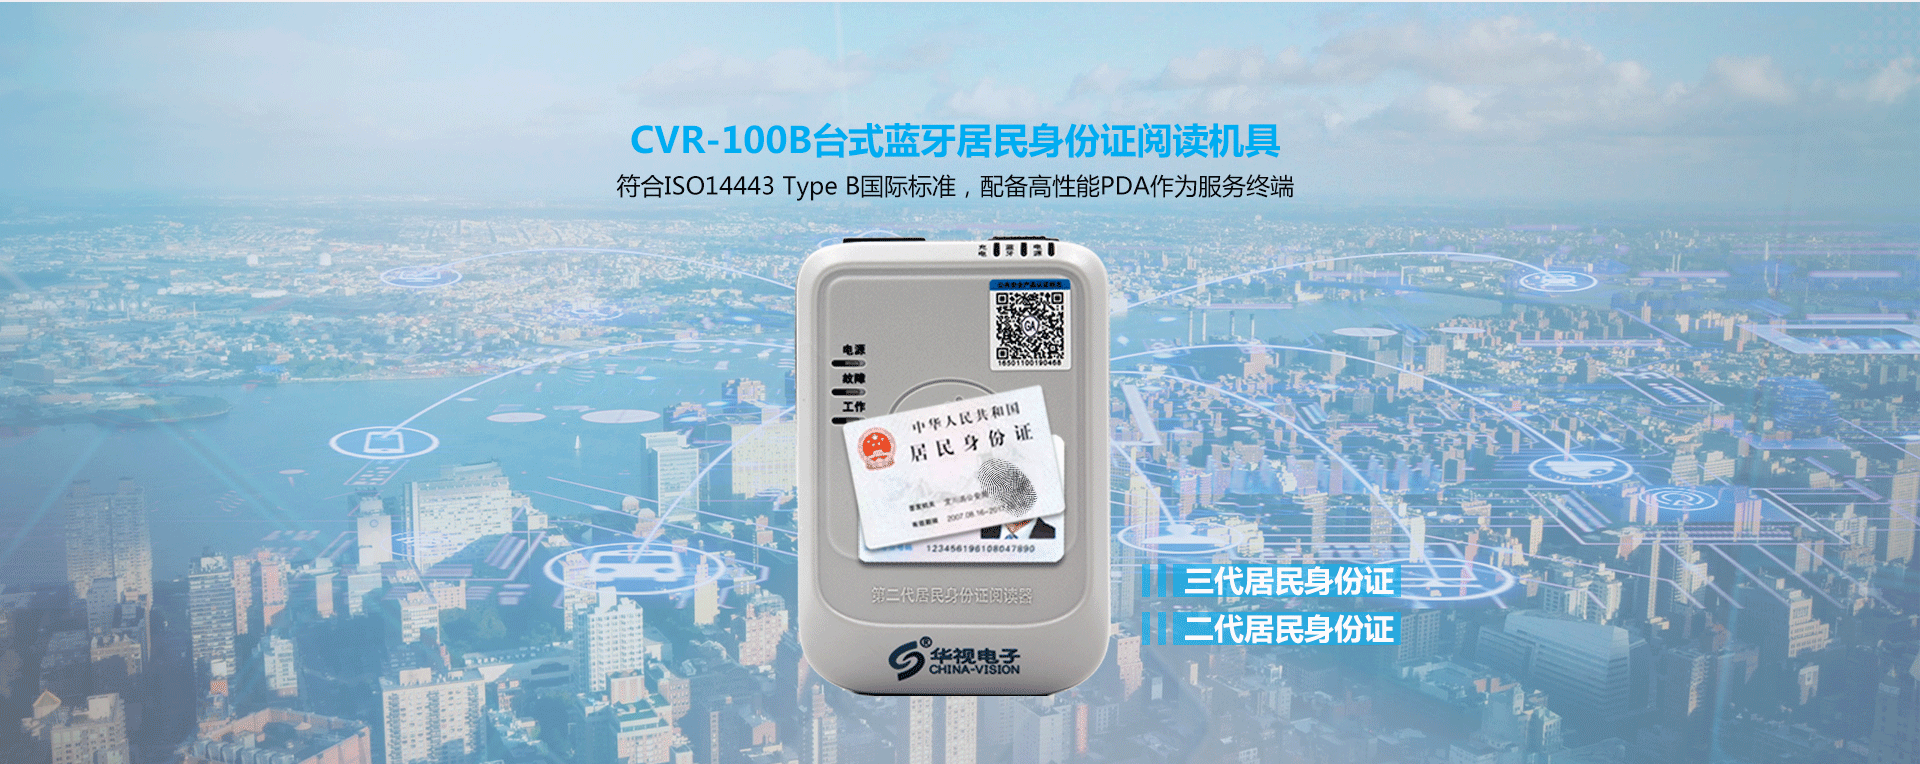 CVR-100B台式蓝牙居民身份证阅读机具产品详情页_01